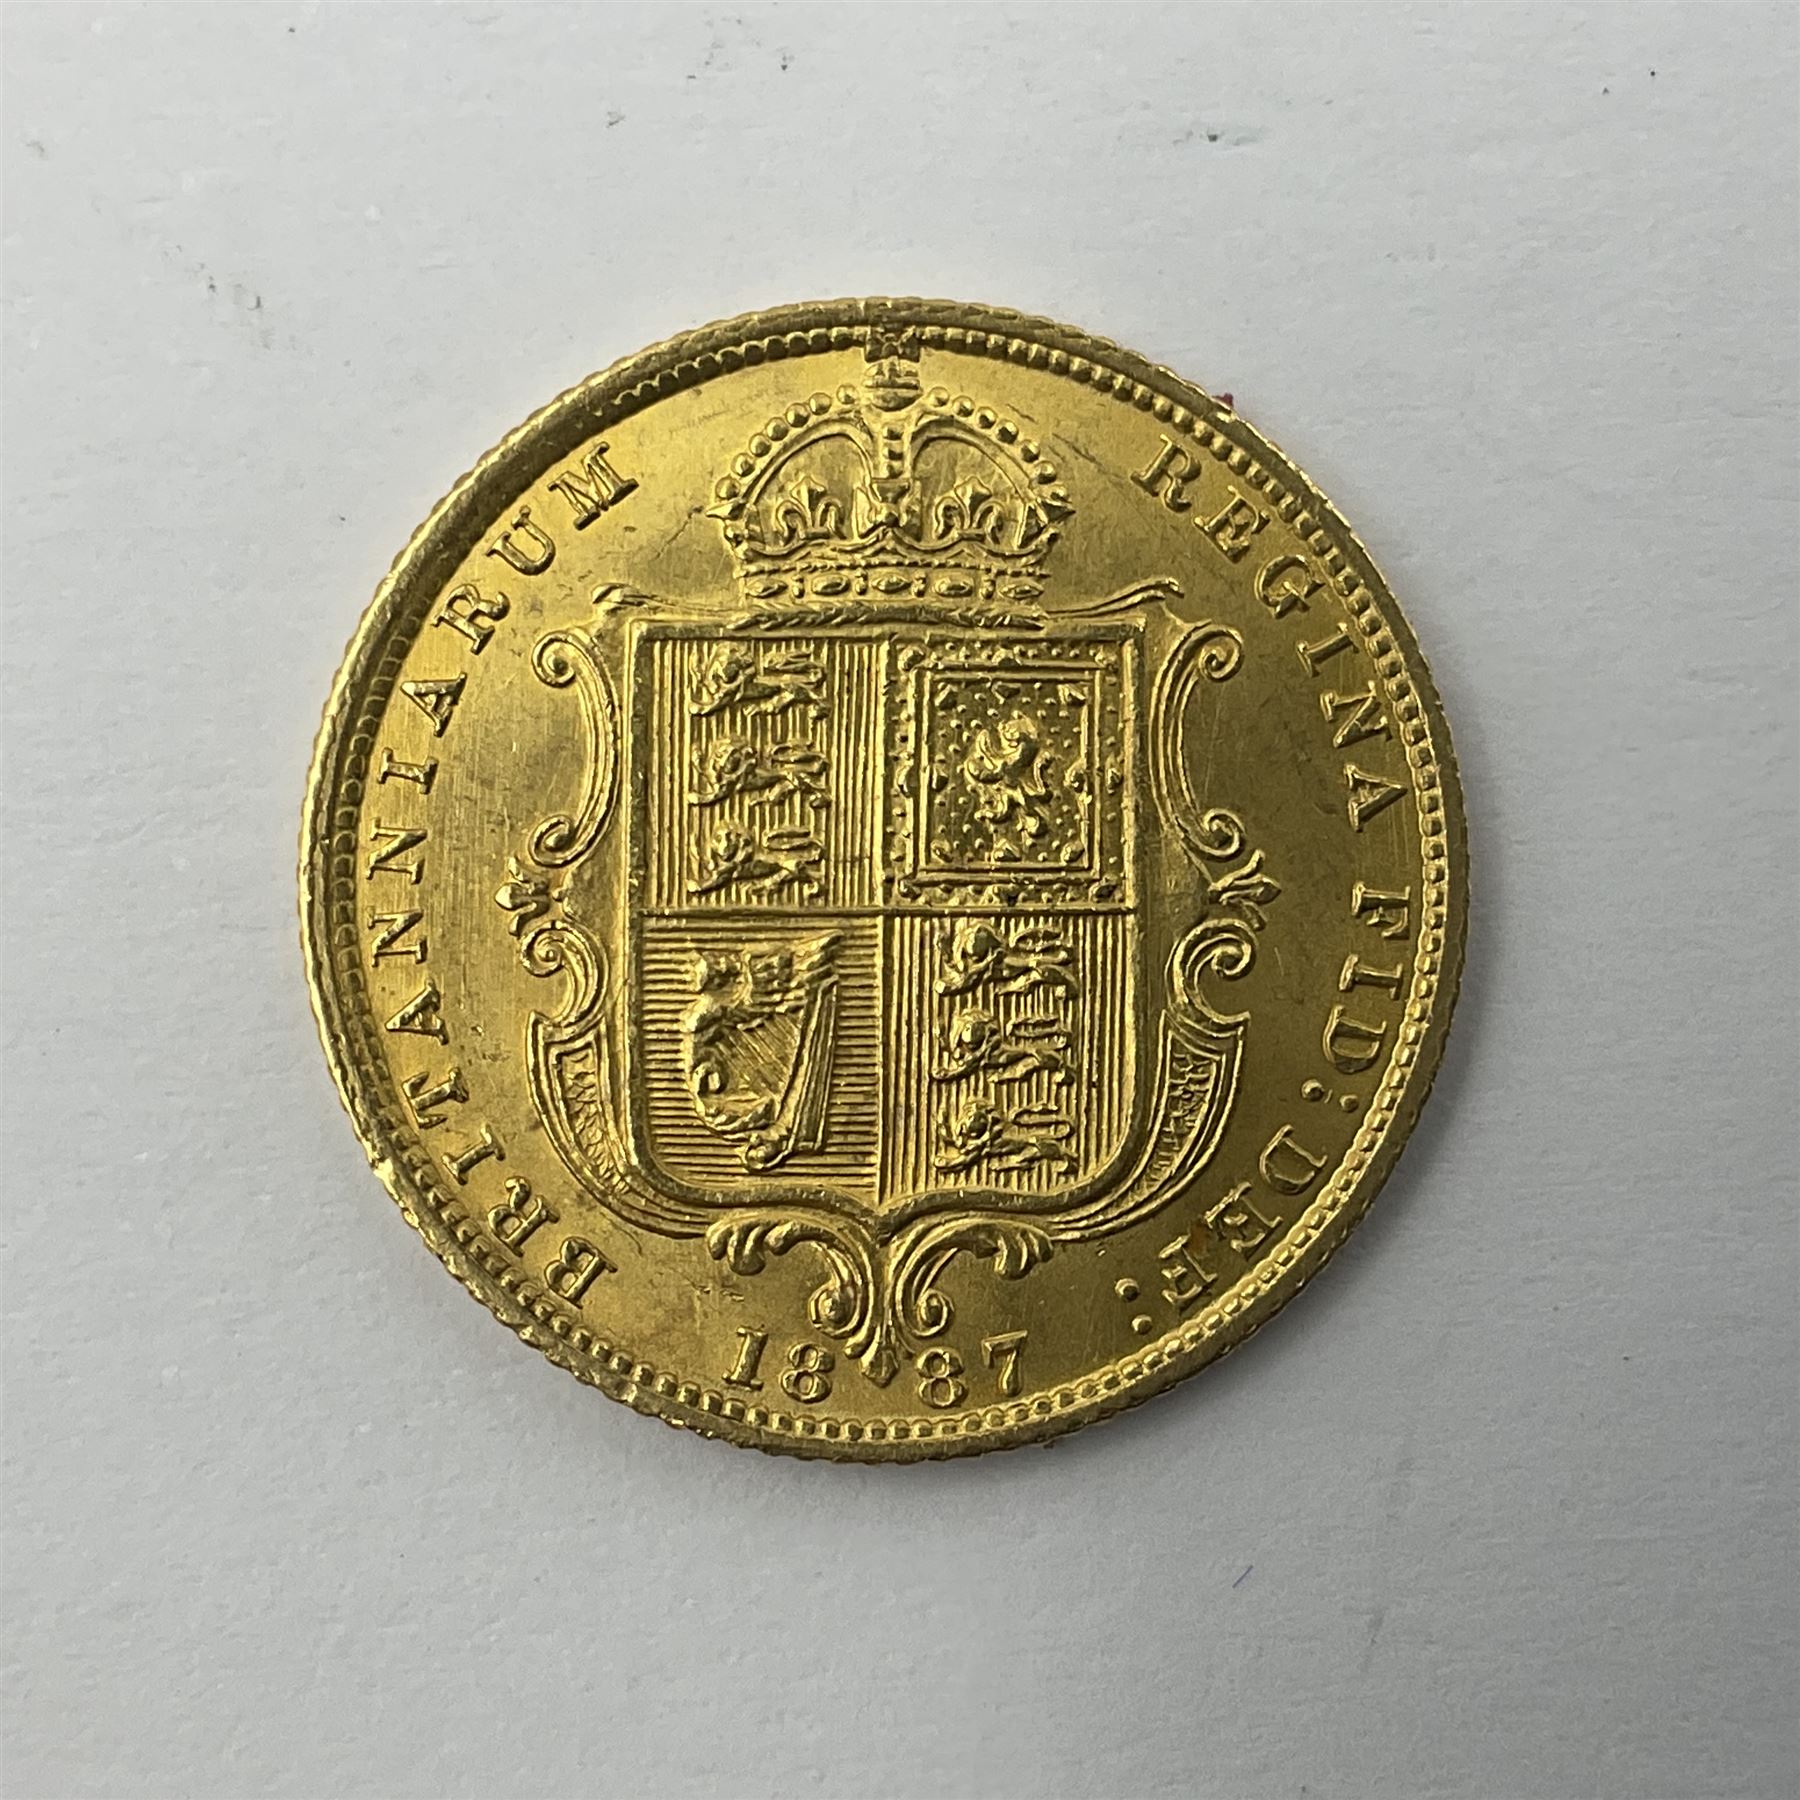 Queen Victoria 1887 gold half sovereign coin - Image 3 of 3